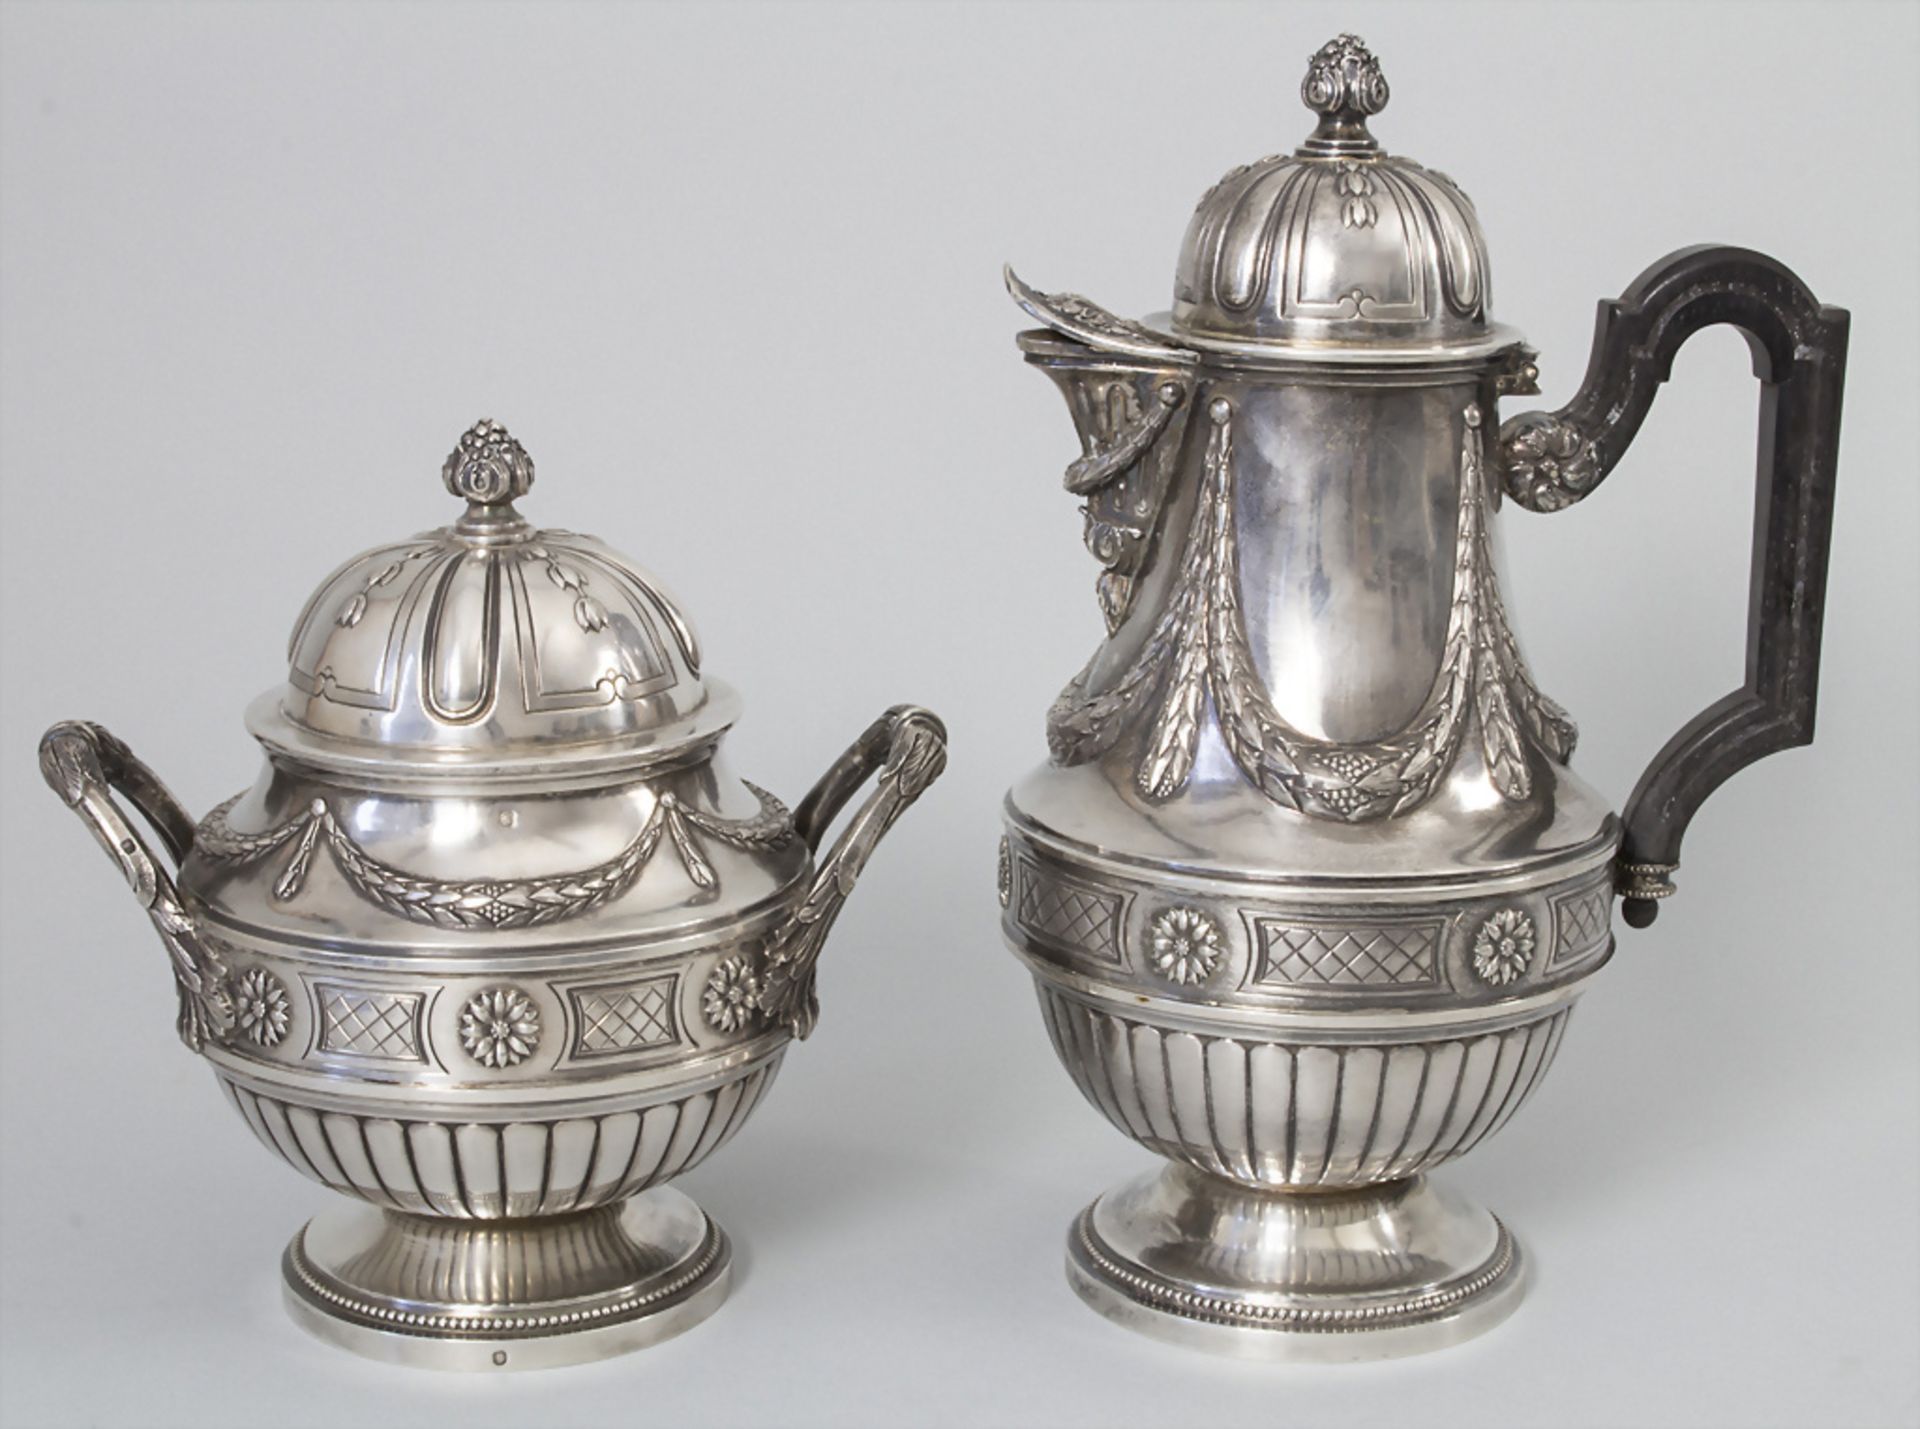 Kaffeekanne und Zuckerdose / A silver coffee pot and sugar bowl, Raoul Mauger, Paris 1897-1904